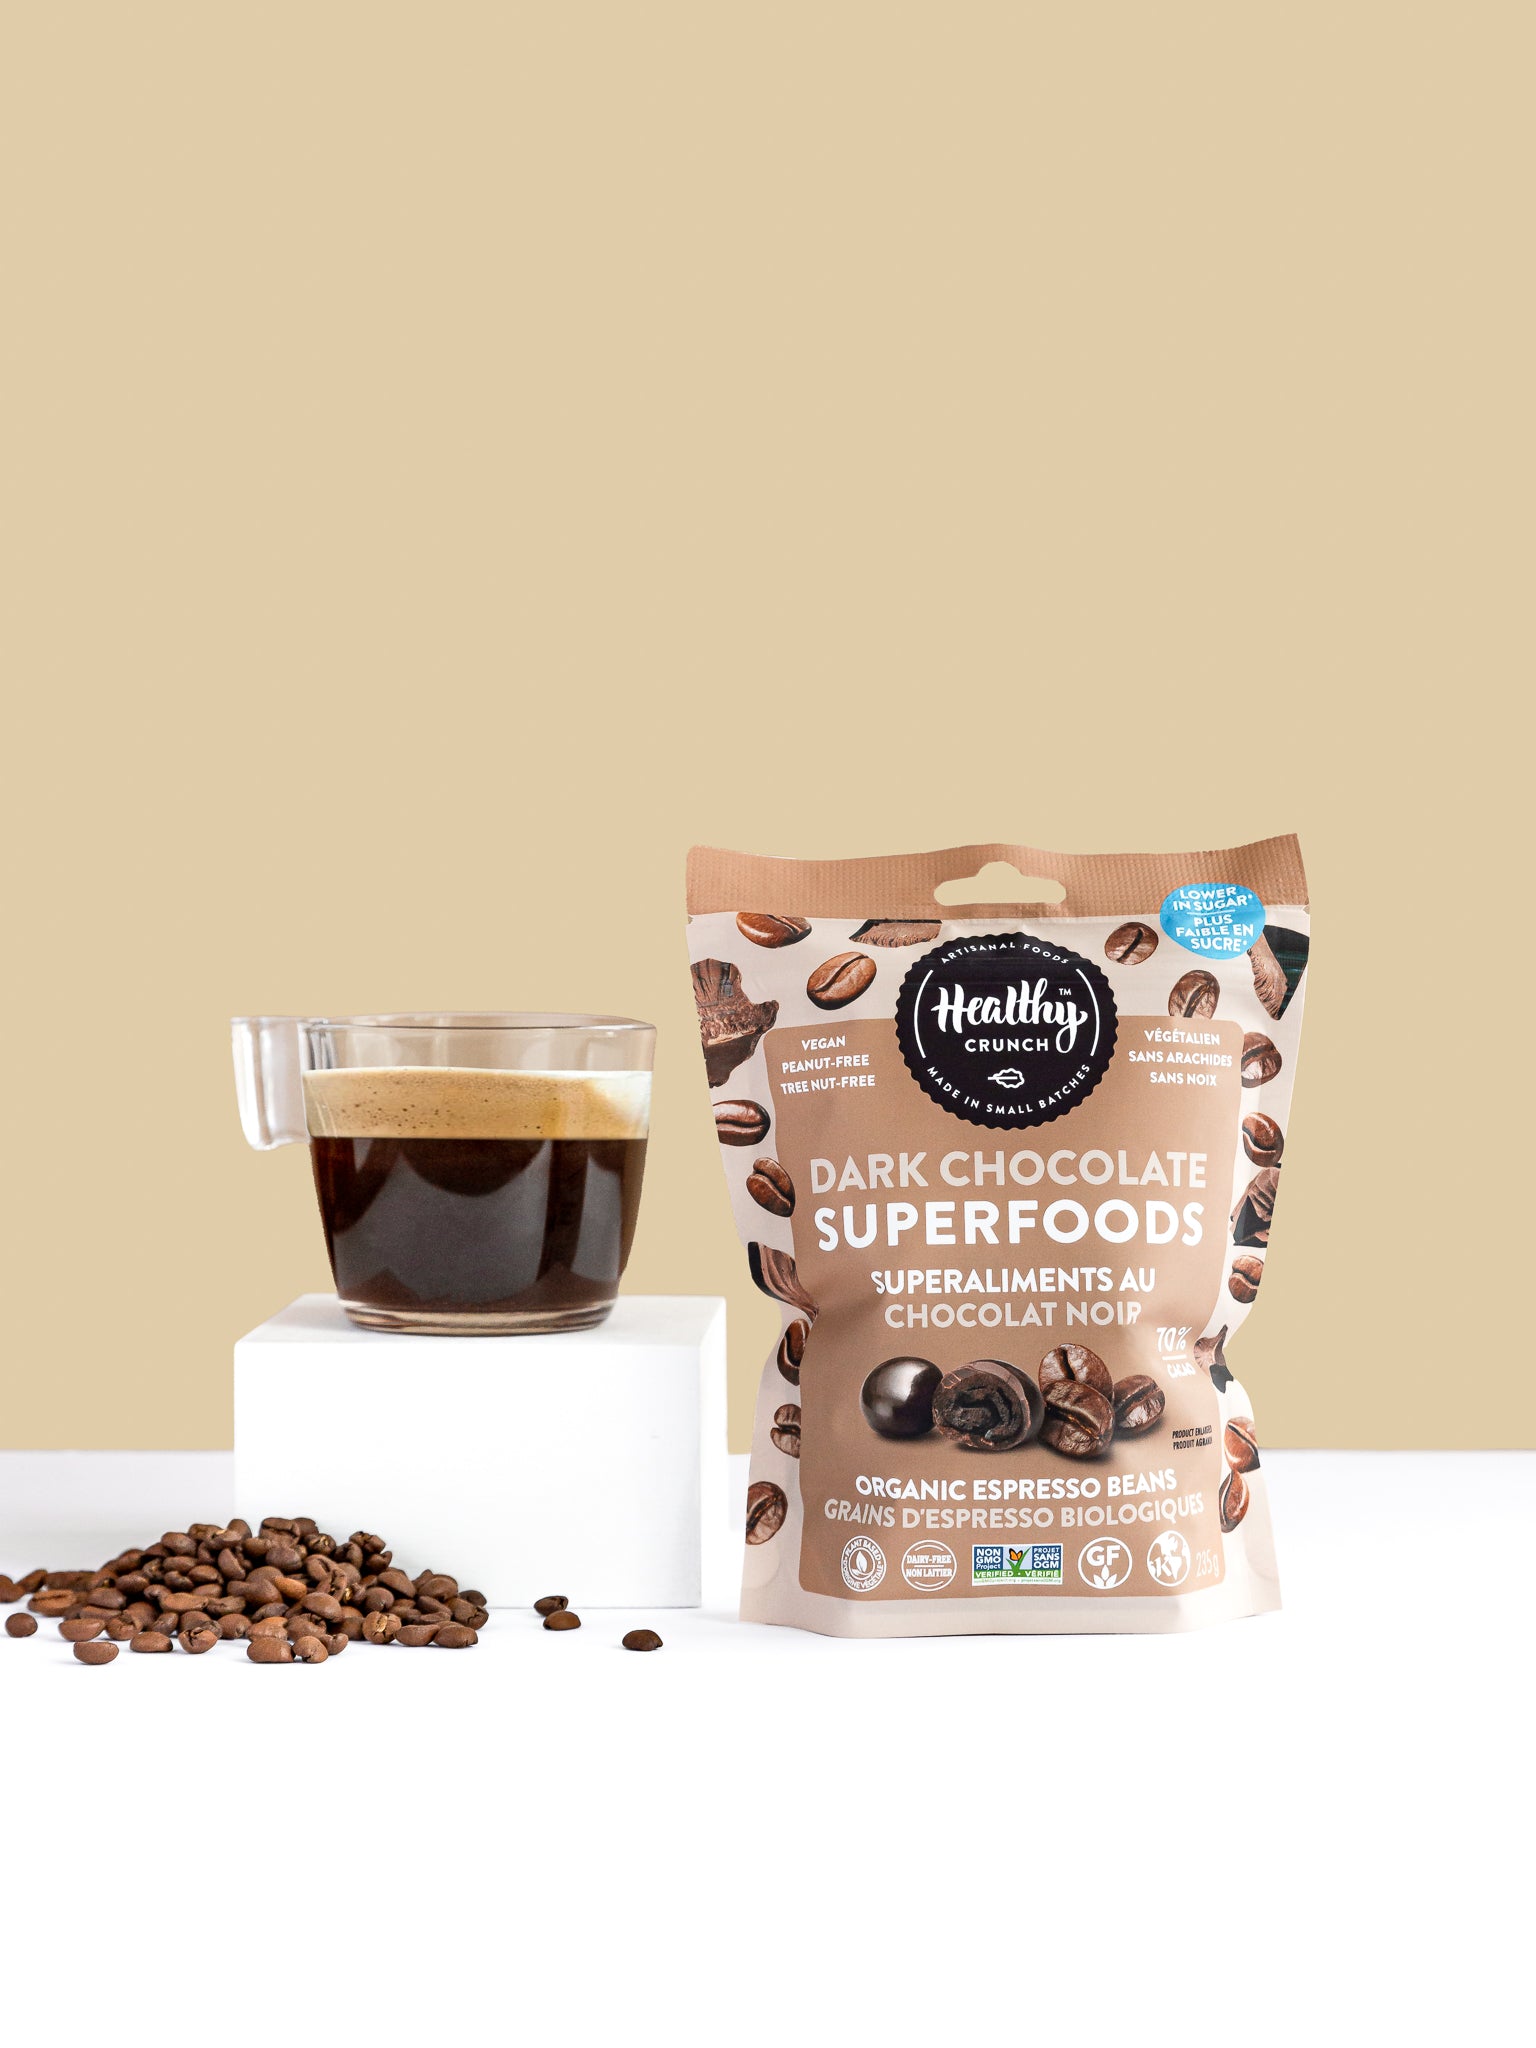 Organic Espresso Coffee Bean Dark Chocolate Superfoods - Healthy